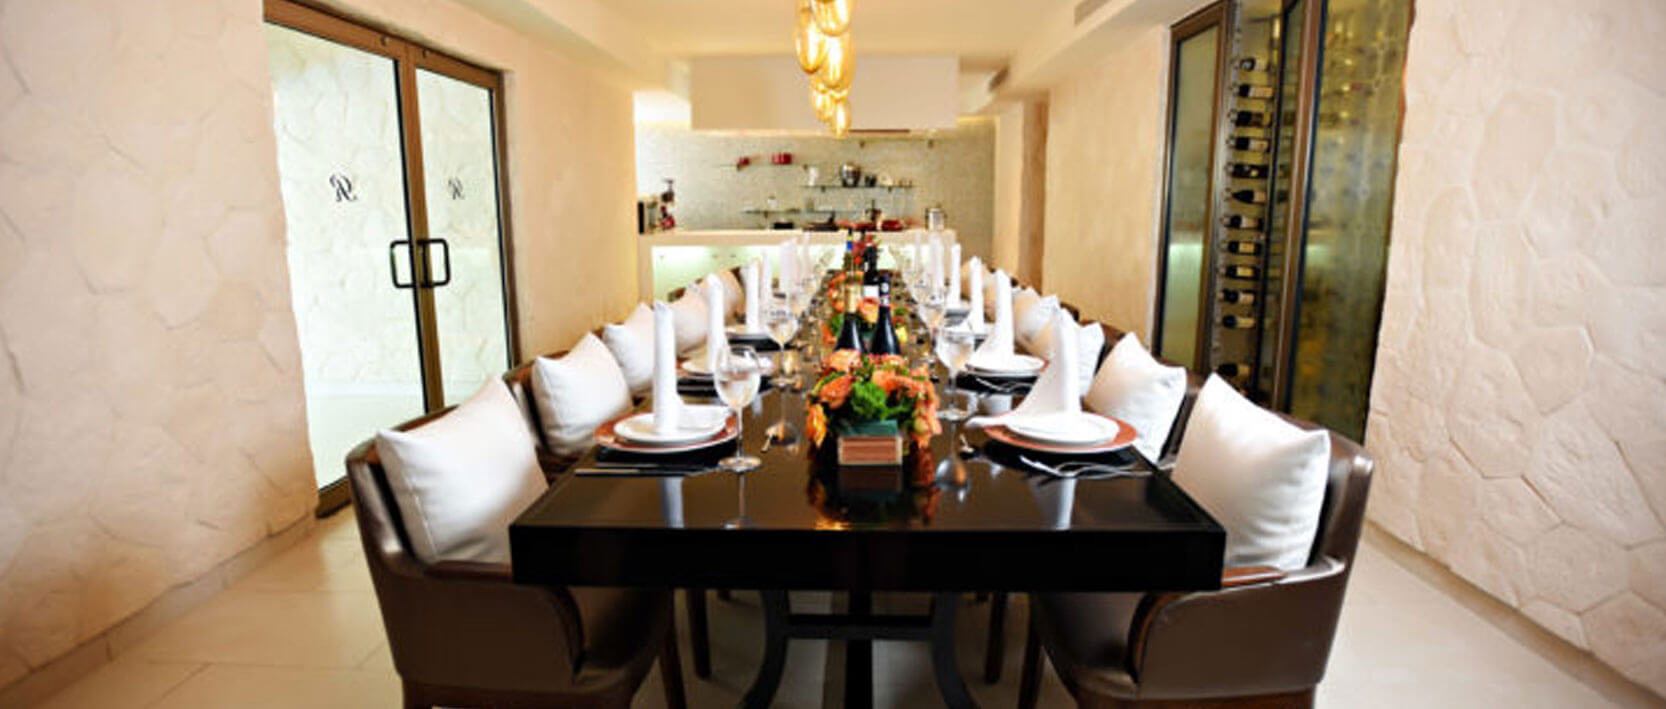 Royalton Riviera Cancun Restaurants and Bars - C/X Culinary Experience